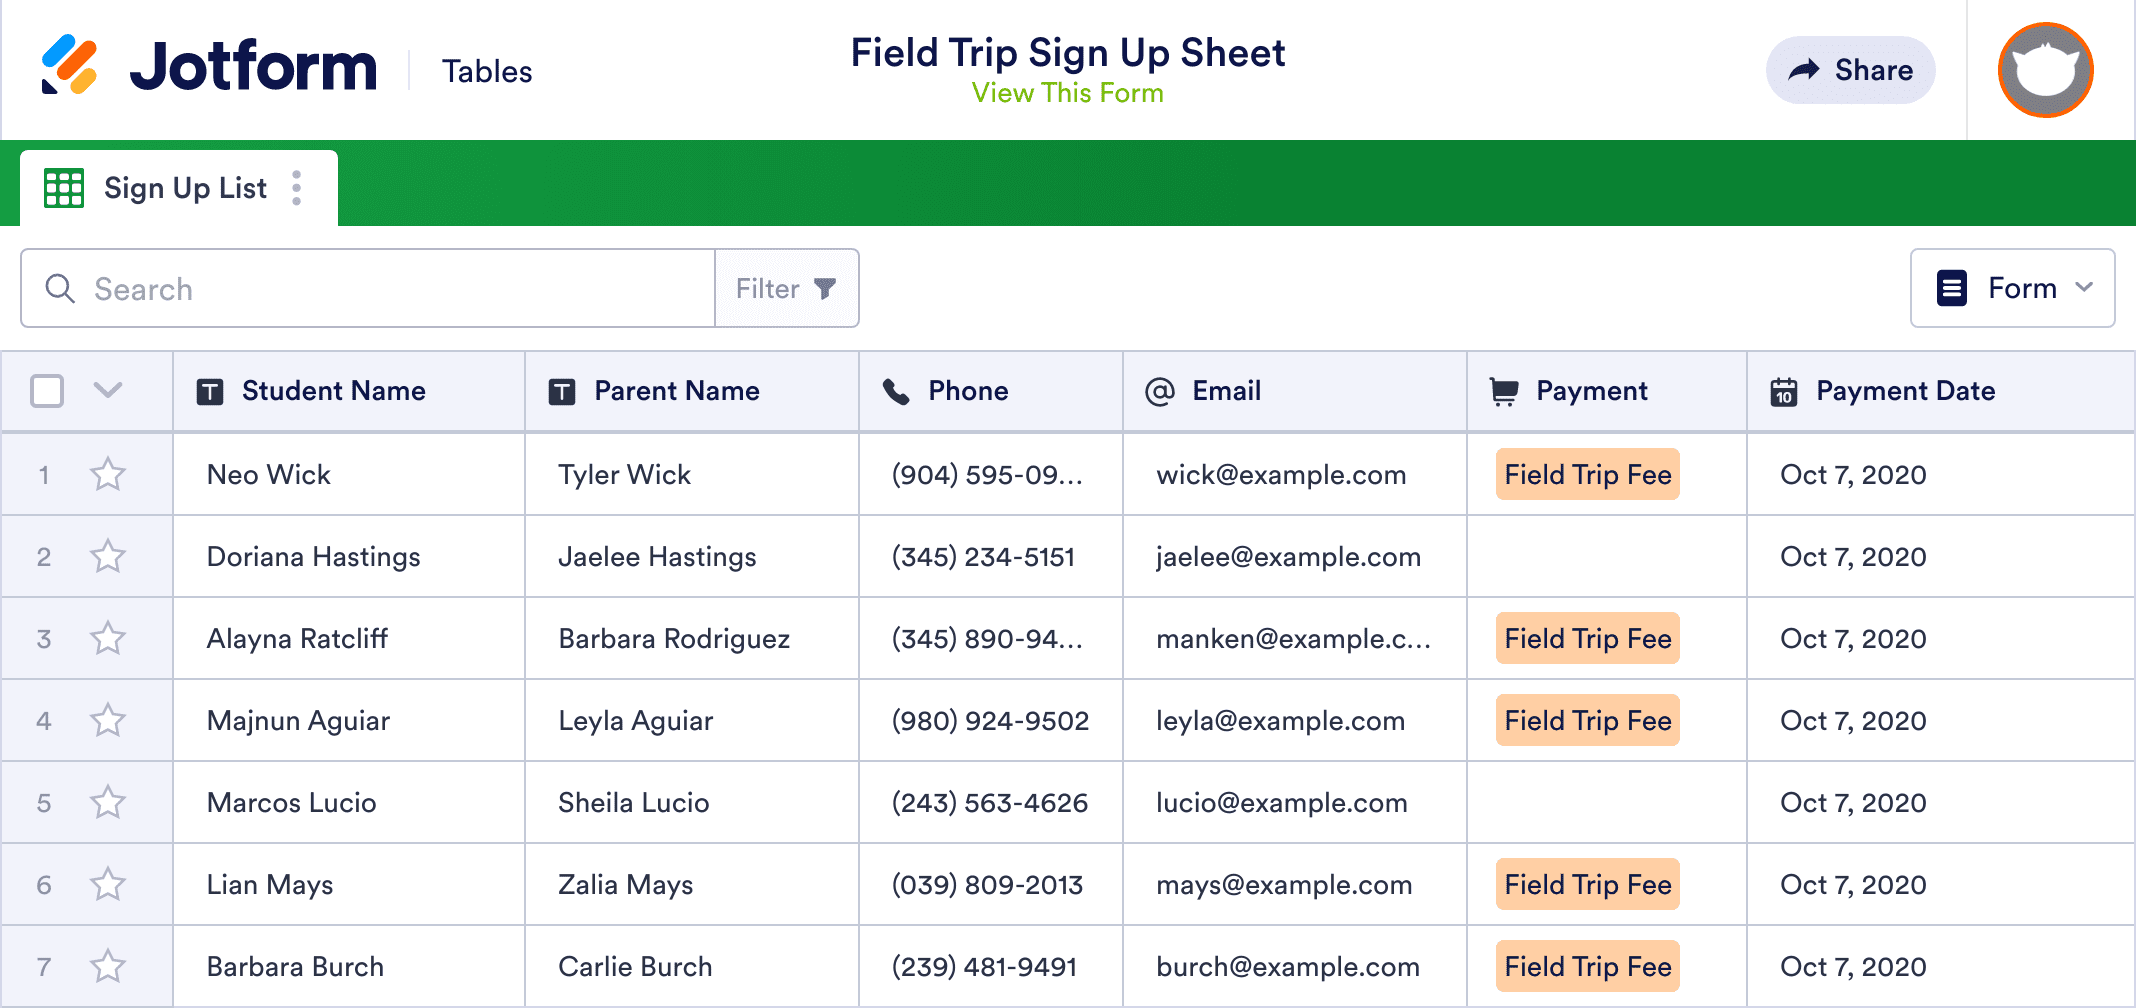 field-trip-sign-up-sheet-template-jotform-tables